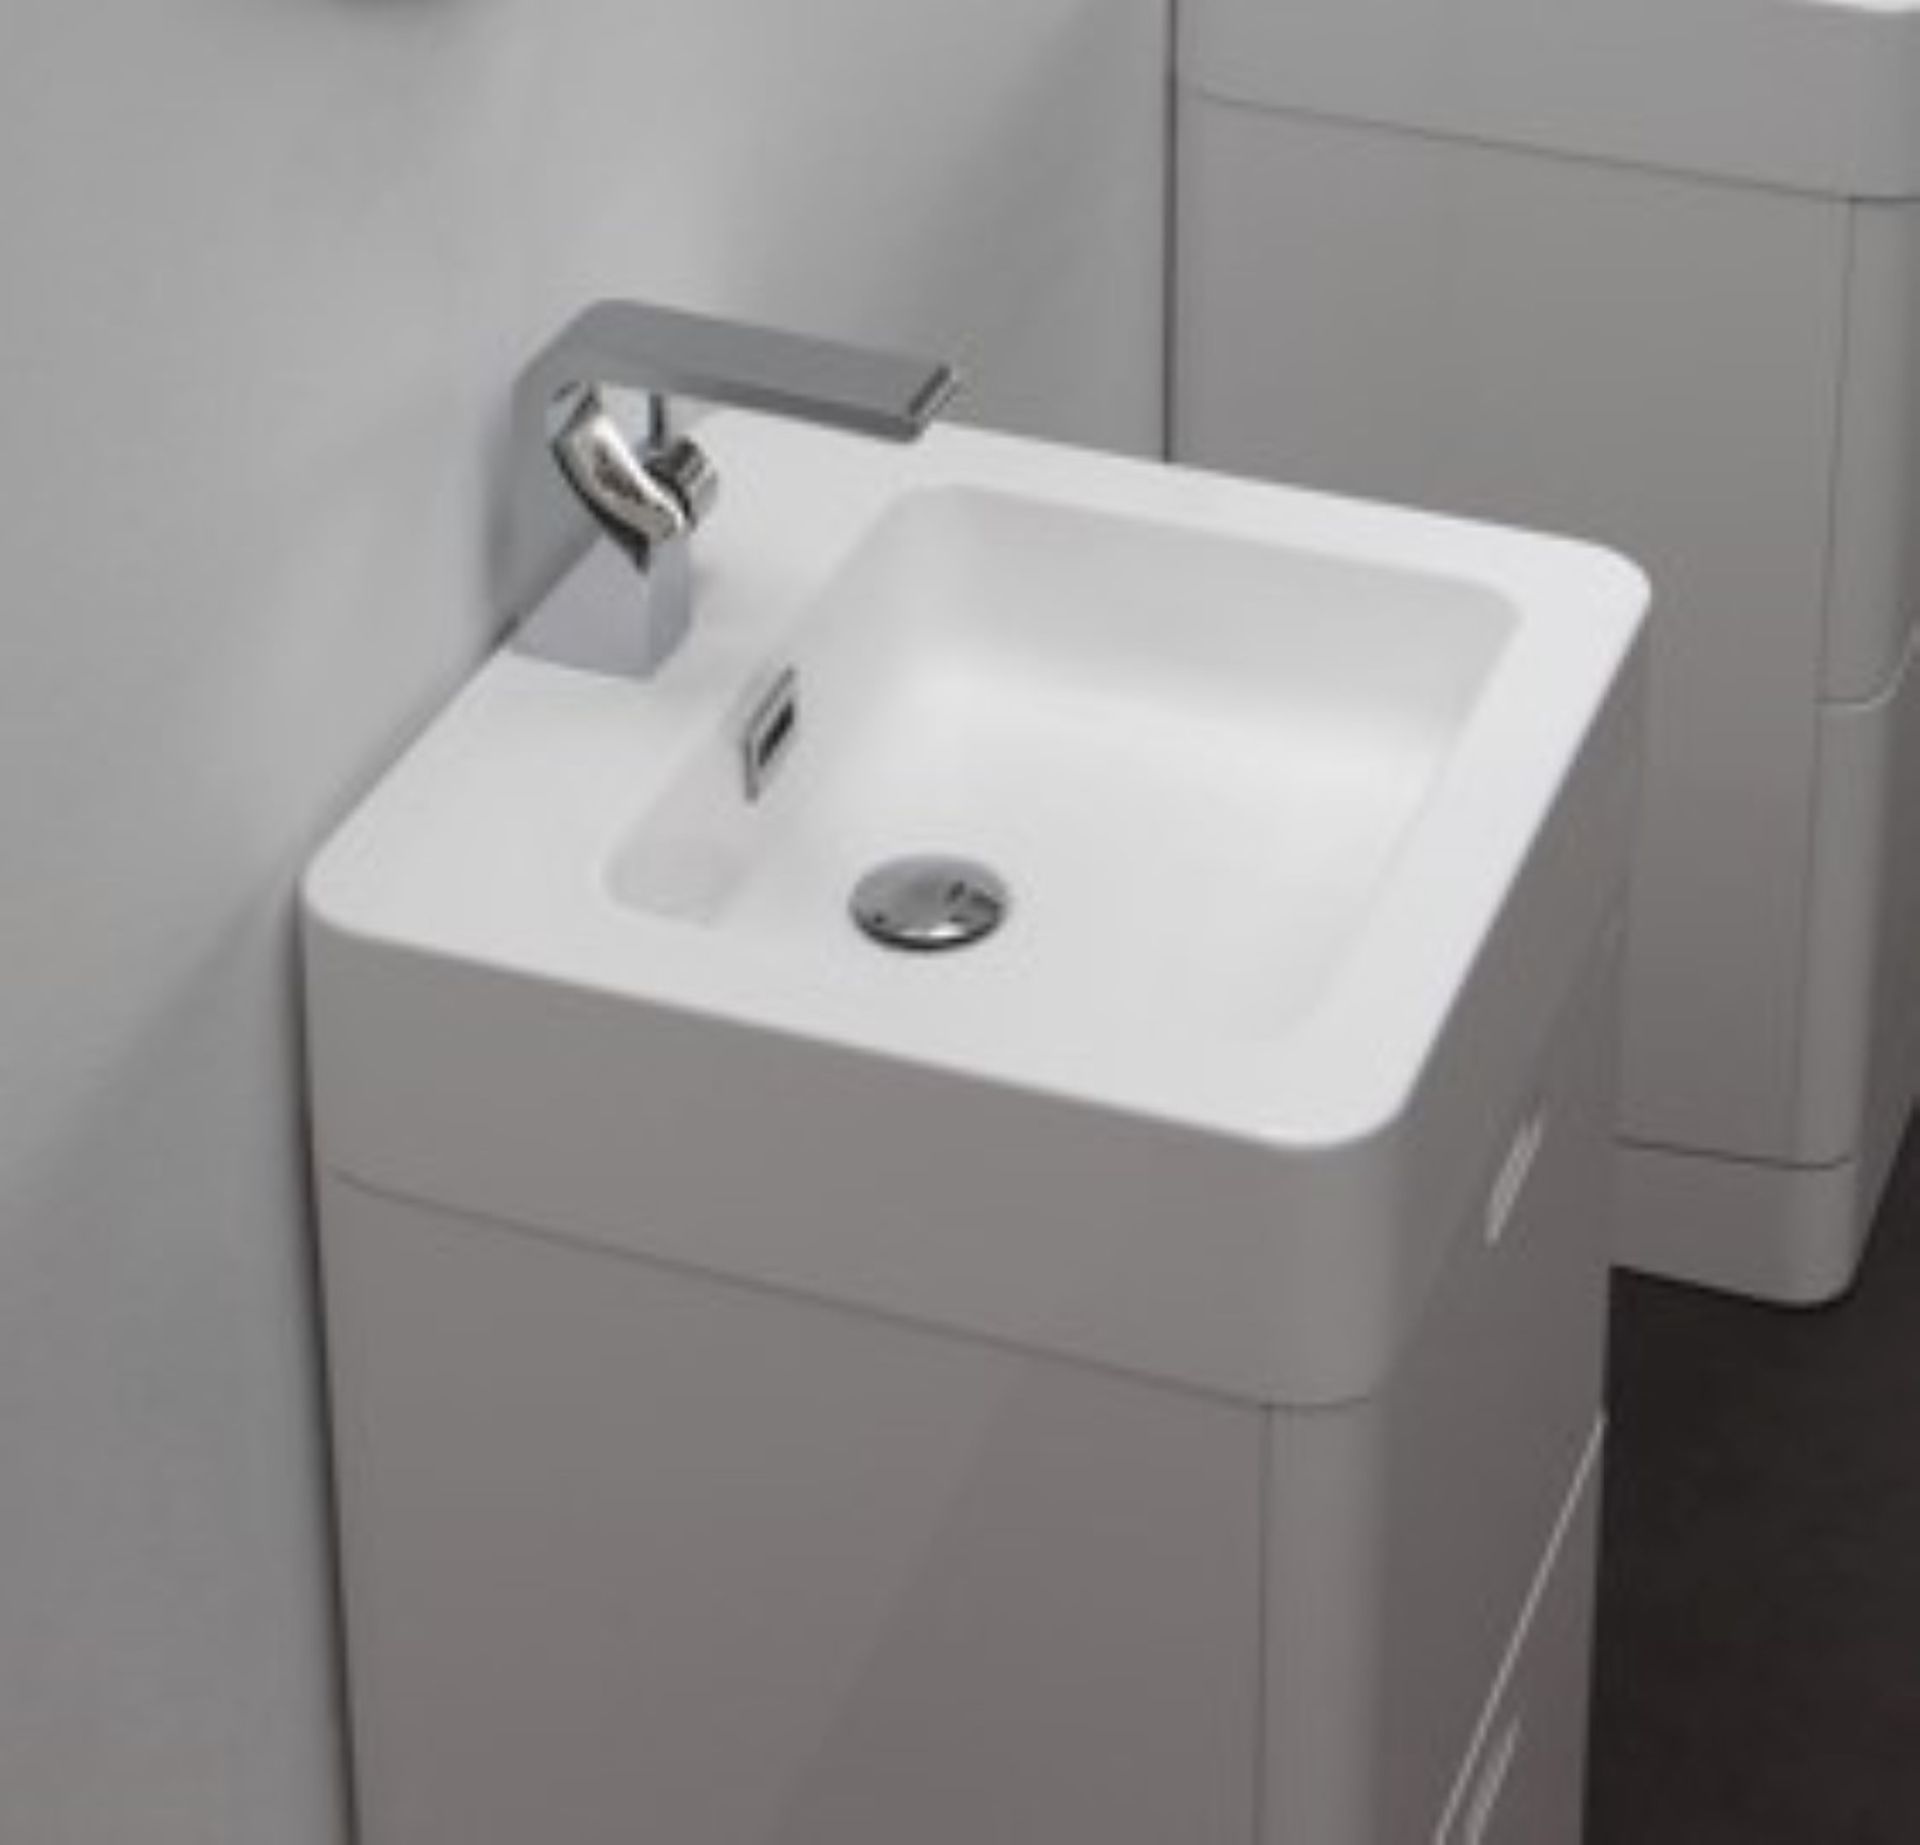 1 x Austin Bathrooms MINI STACKER Bathroom Vanity Unit With MarbleTECH Sink Basin - RRP £650 - - Image 3 of 5